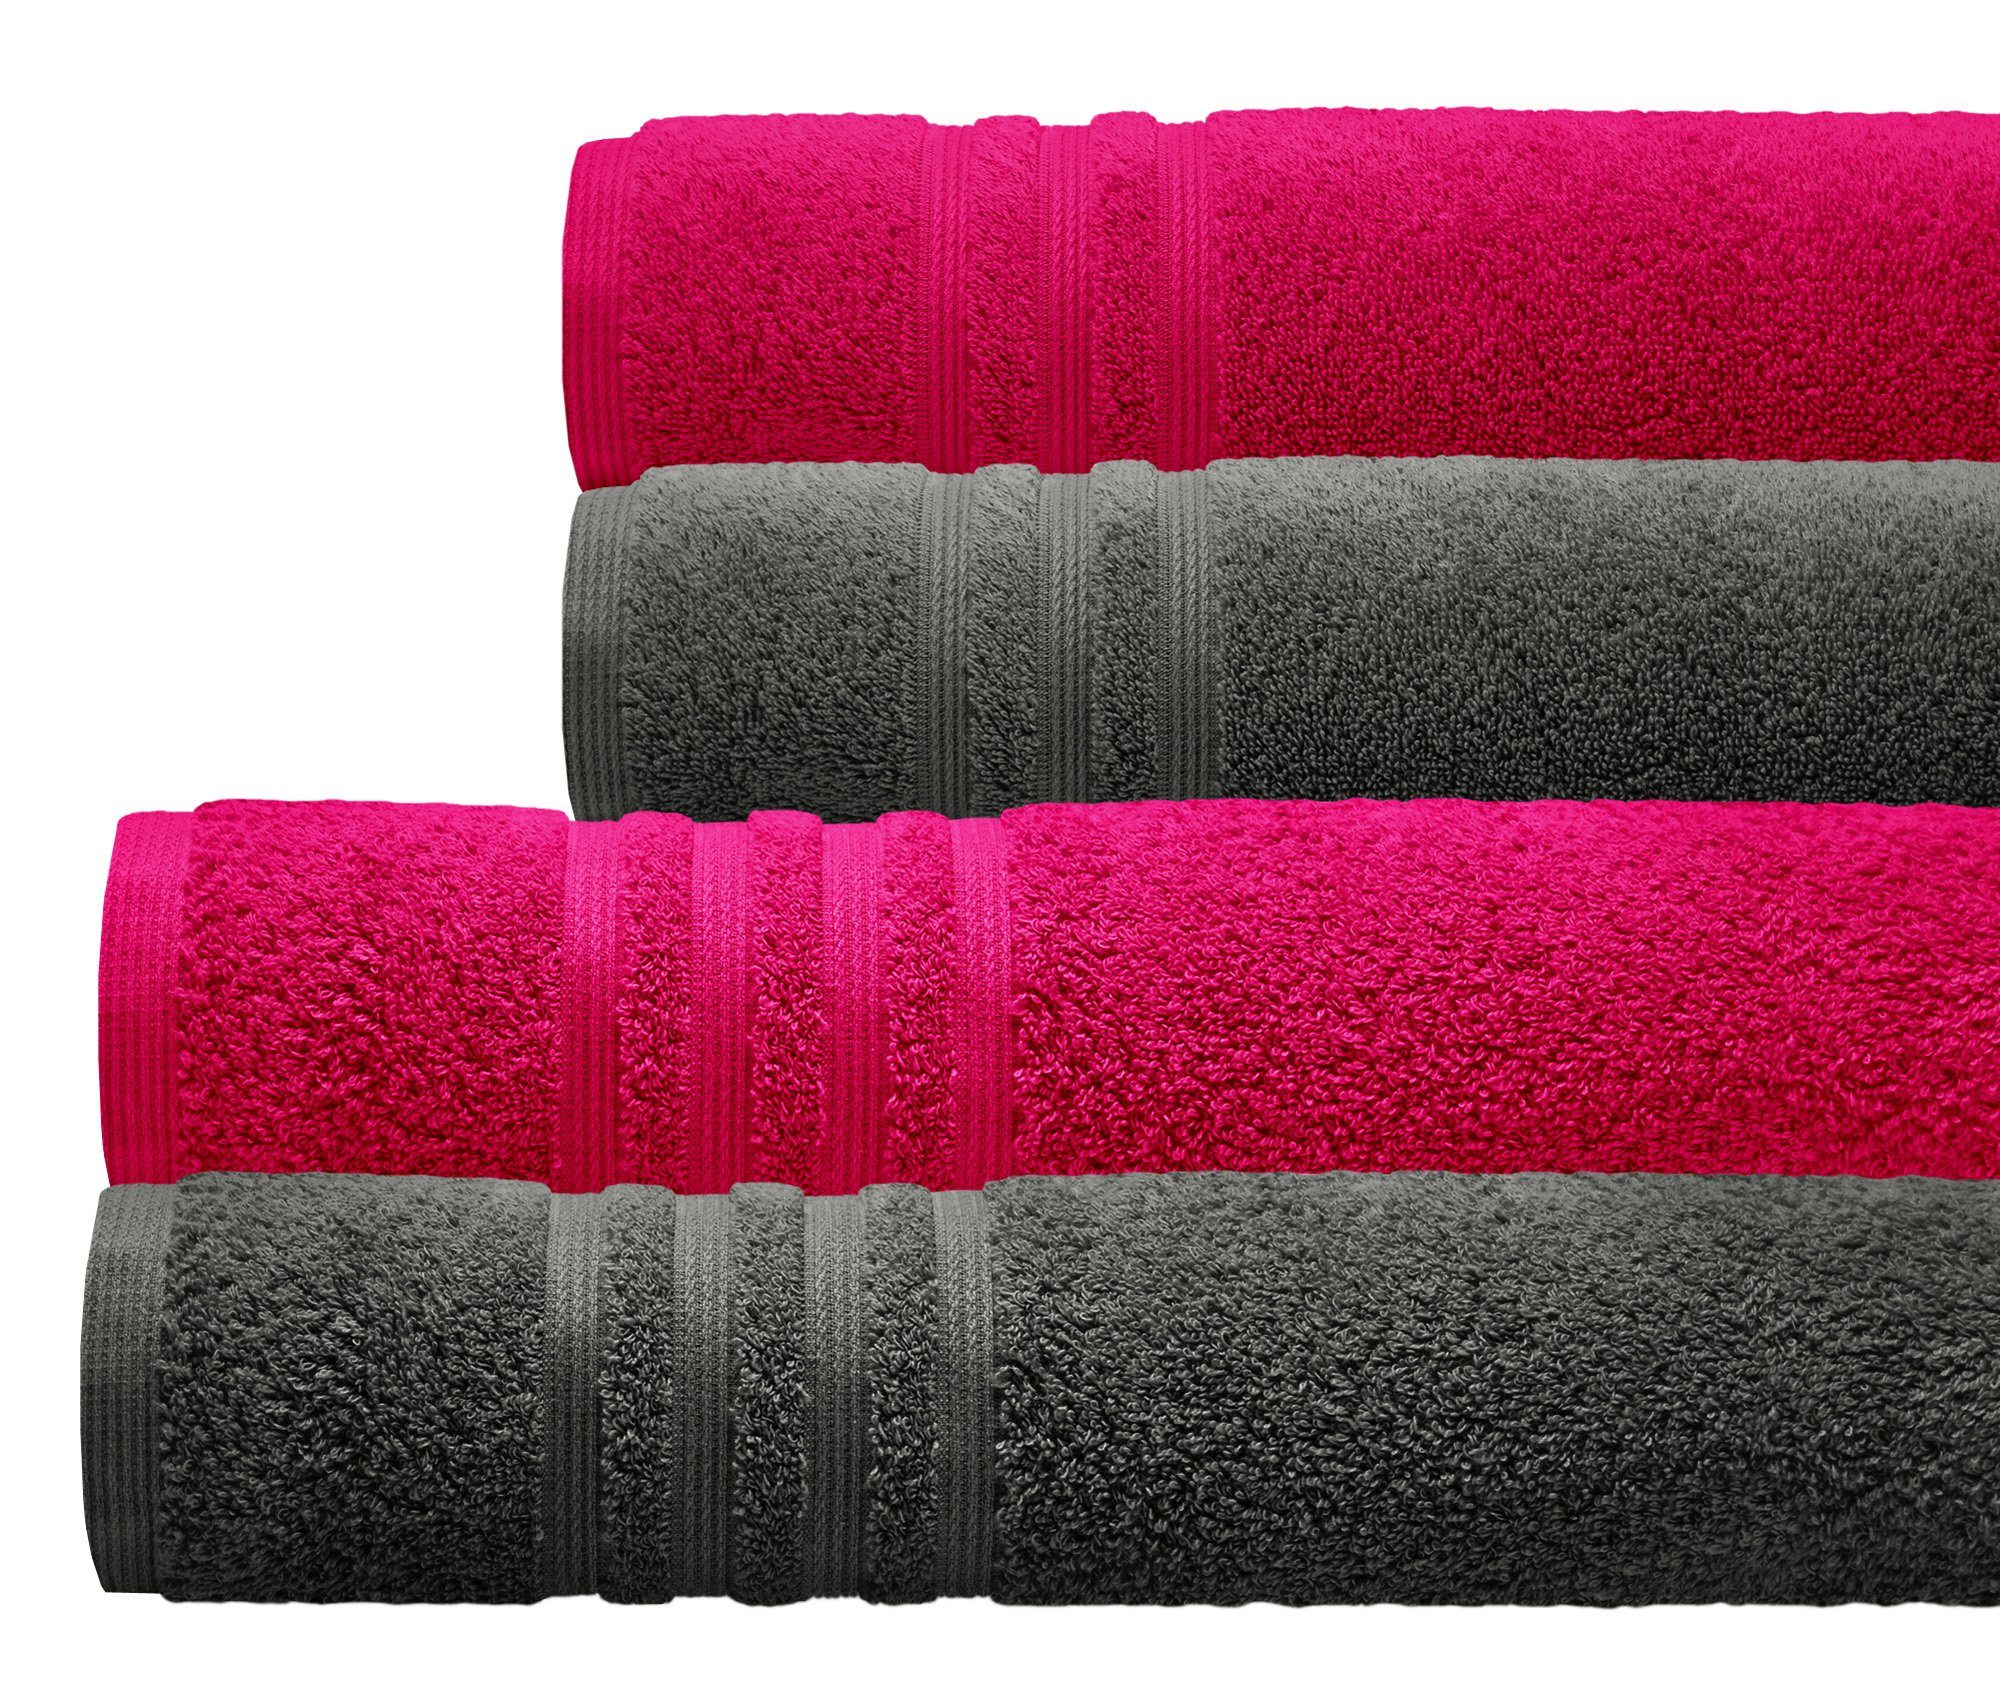 Lashuma Handtuch Set London, Frottee, (Set, 4-tlg), Einfarbige Handtücher Bad je 2x 50x100 und 70x140 cm Farbkombi: rot - grau Rhabarber - Anthrazit